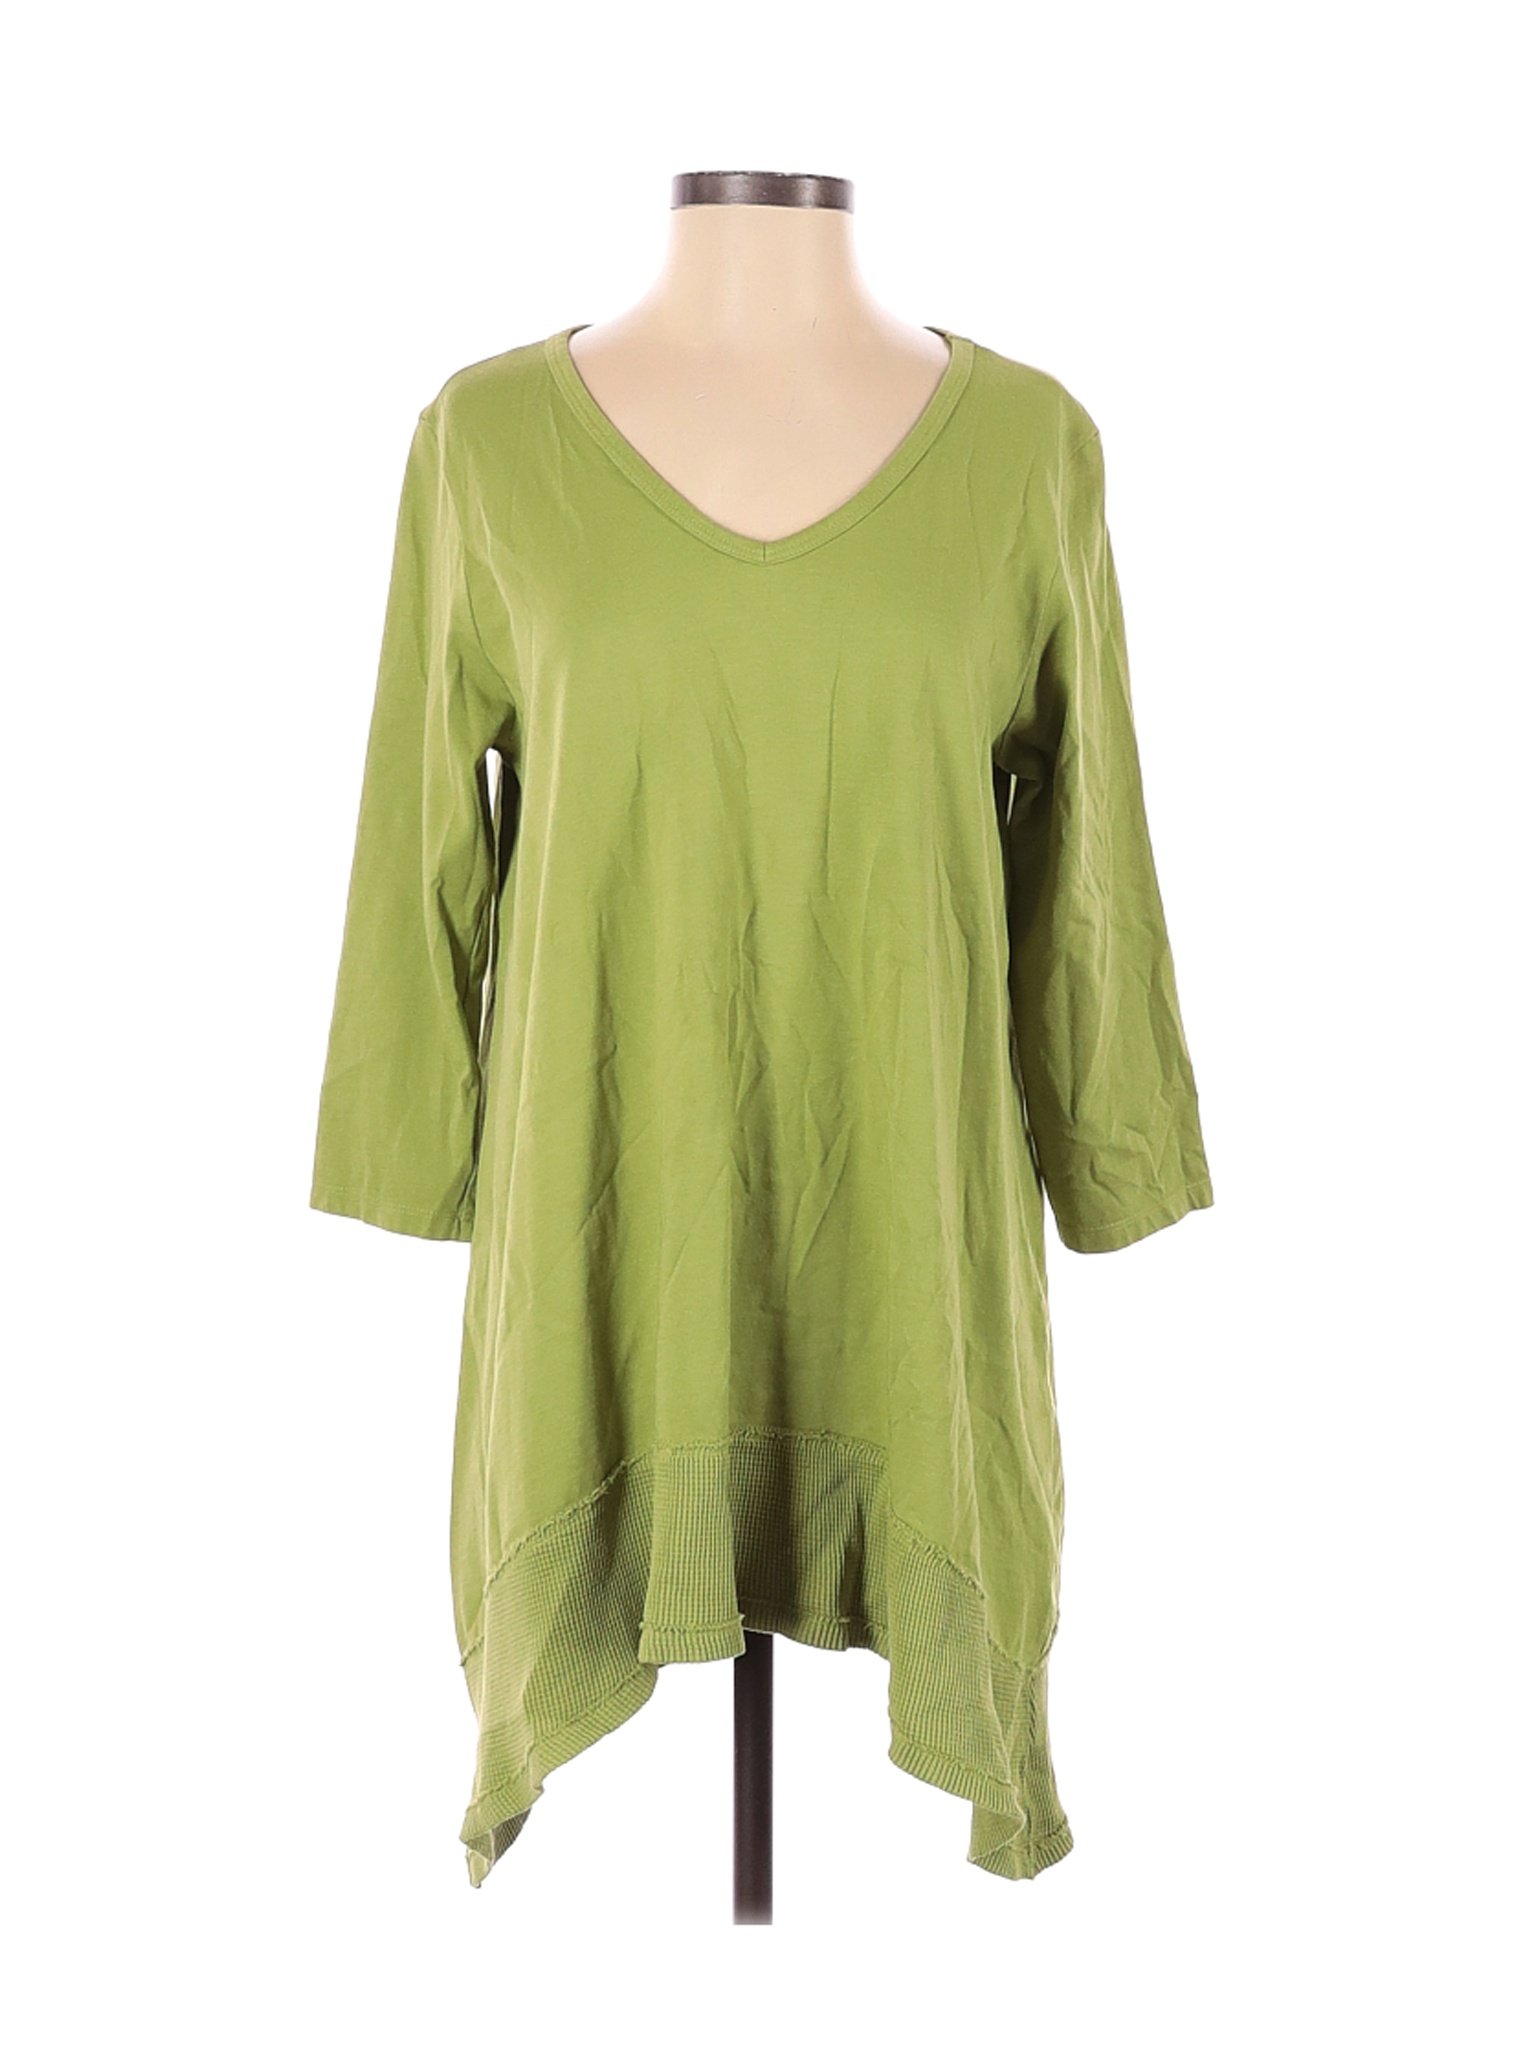 Prairie Cotton Women Green 3/4 Sleeve Top S | eBay